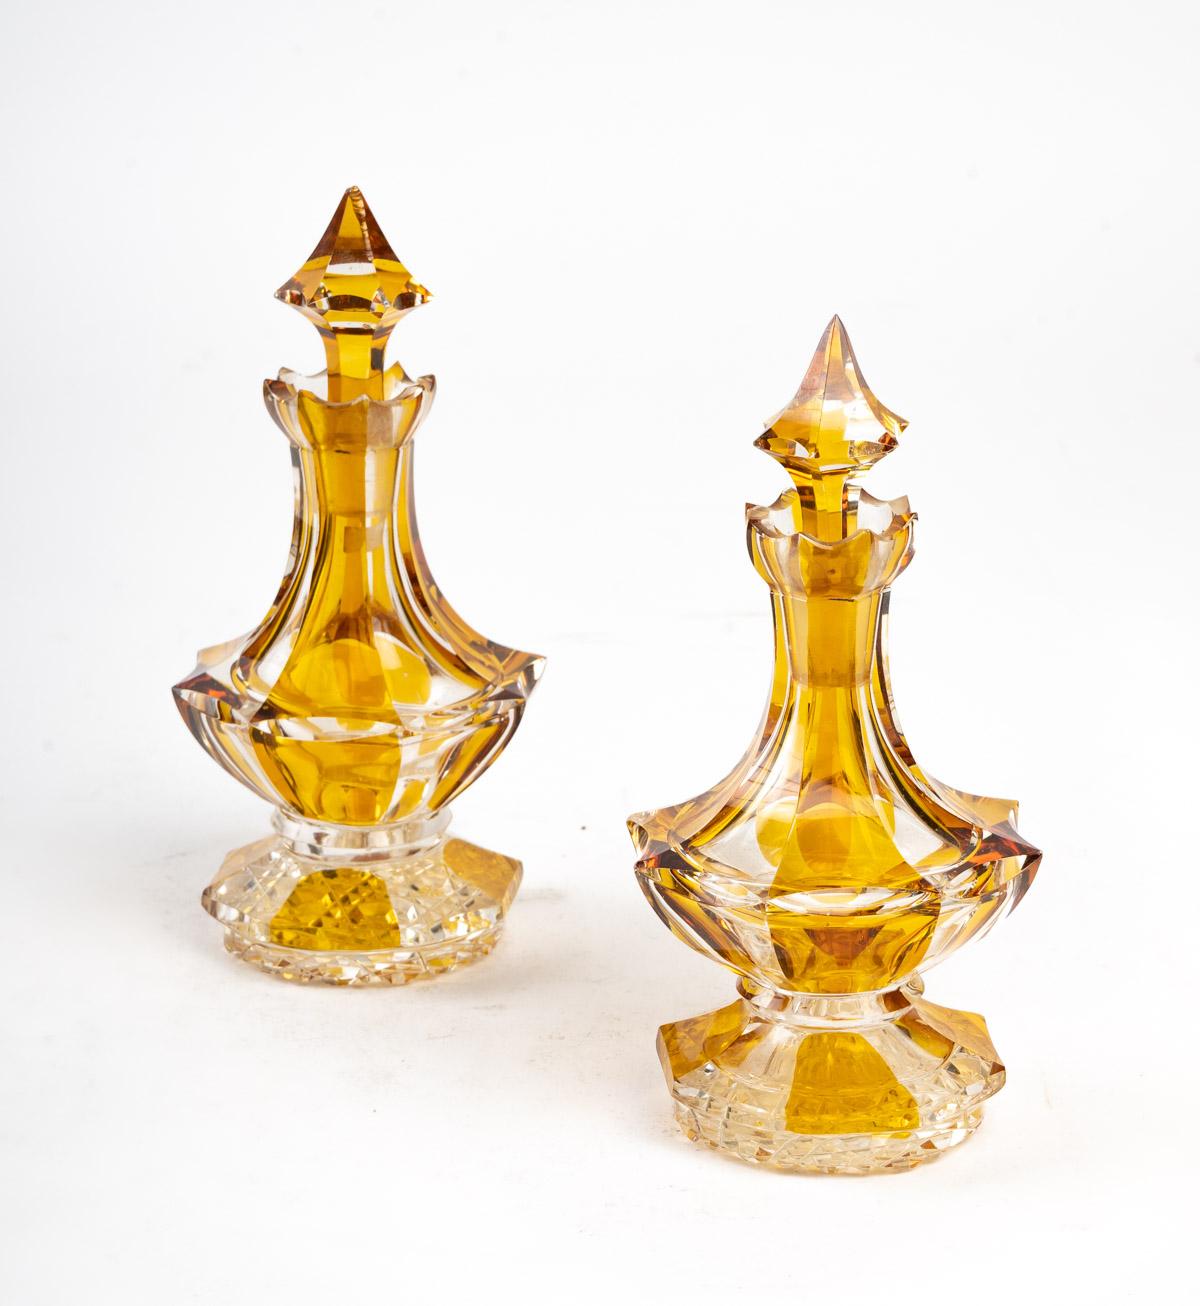 Pair of small Bohemian decanters, 19th century, minor breakage.
Measures: H 16.5 cm, D 9 cm.